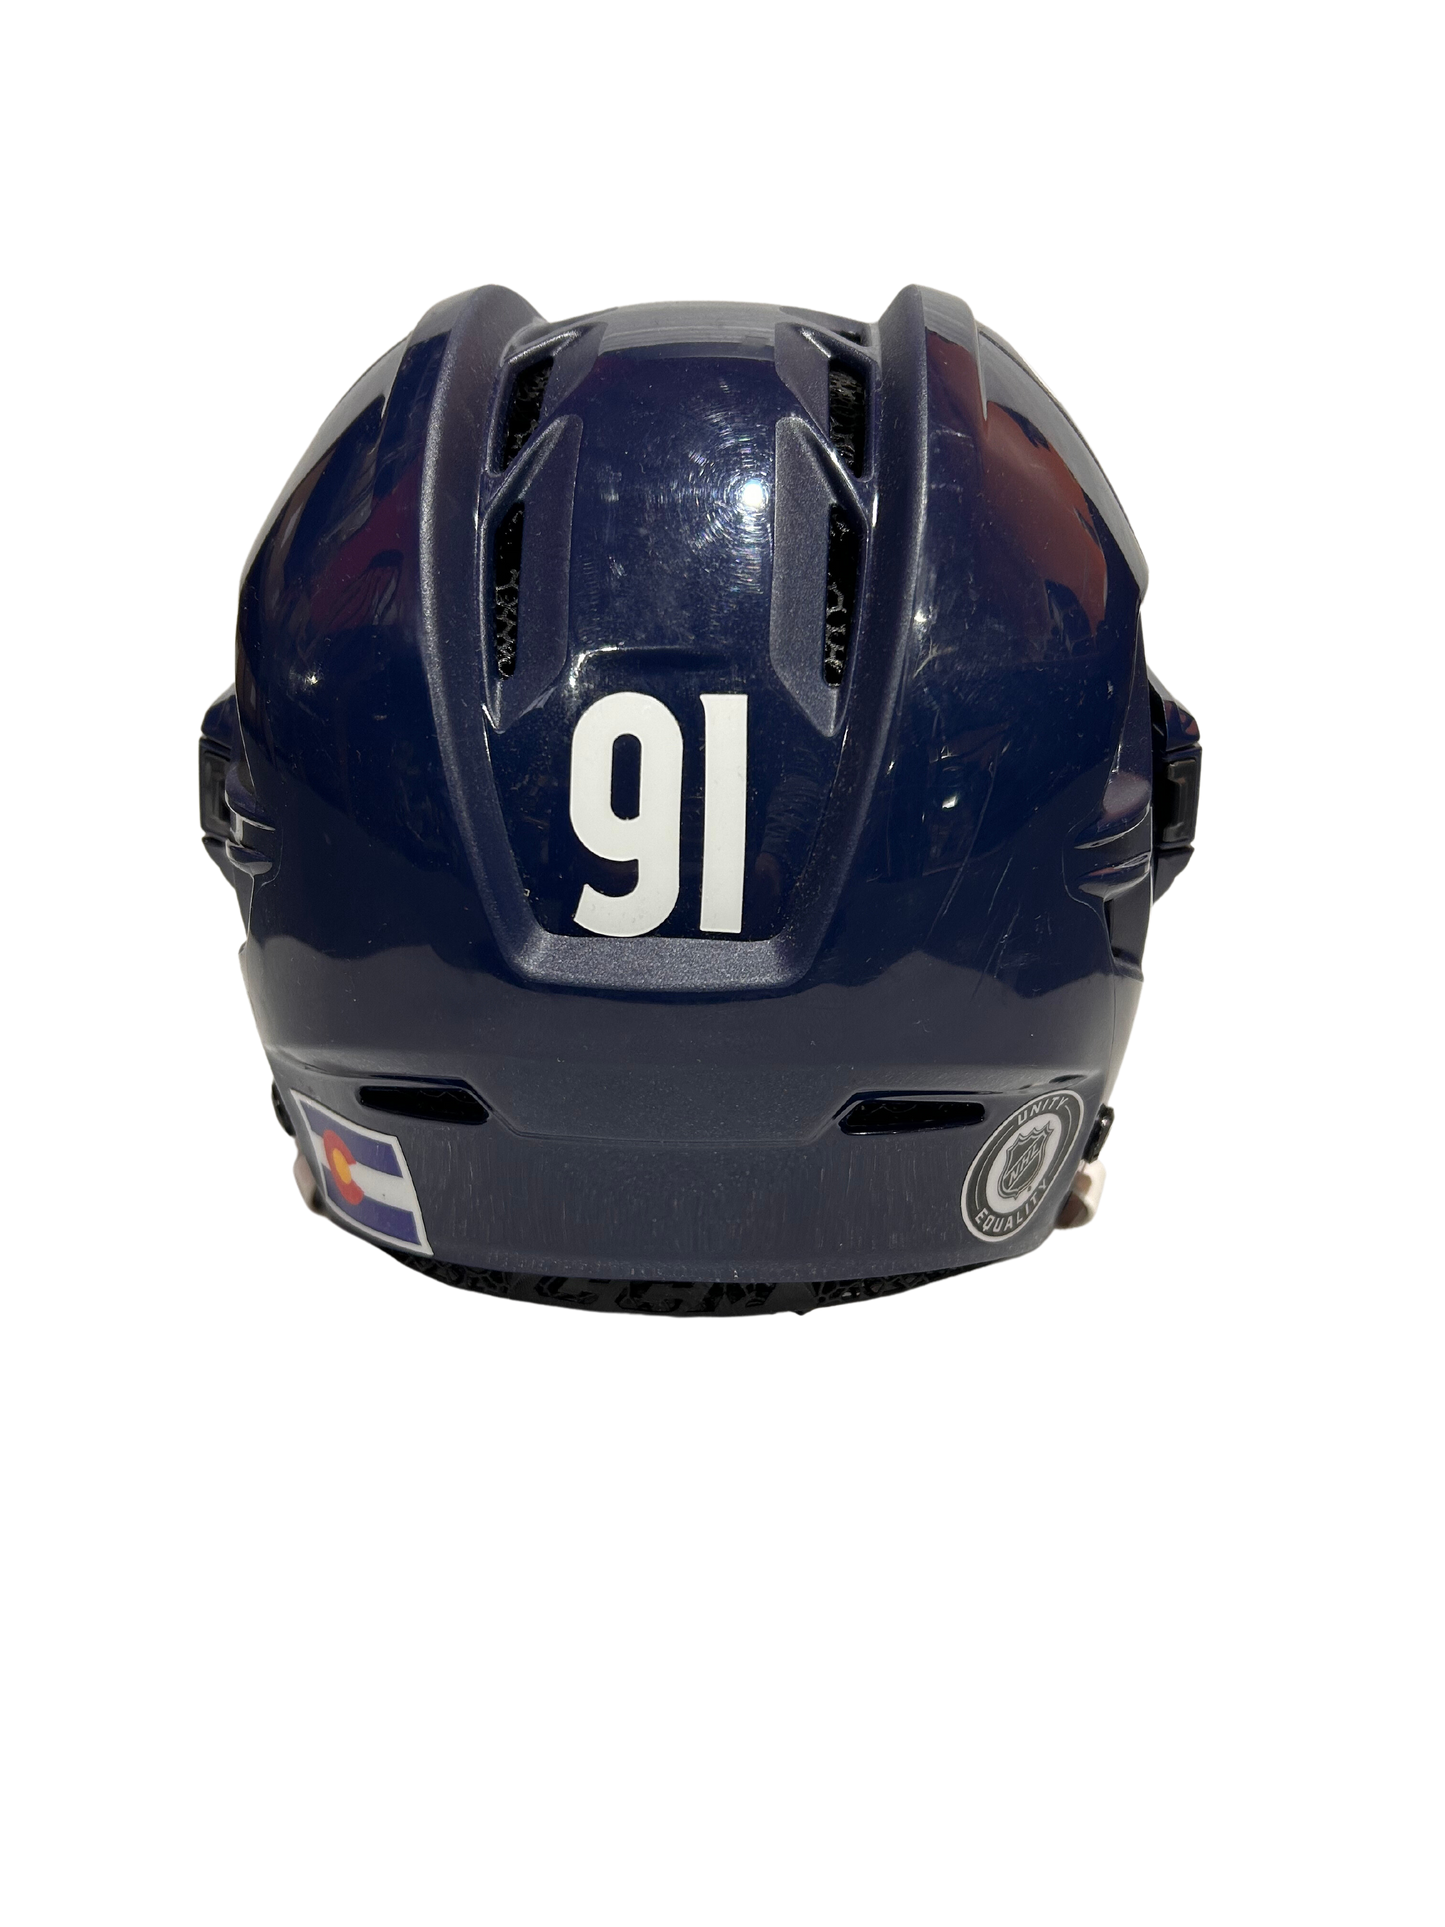 2021/22 Colorado Avalanche Game Worn Alternate Helmets (Multiple Players)